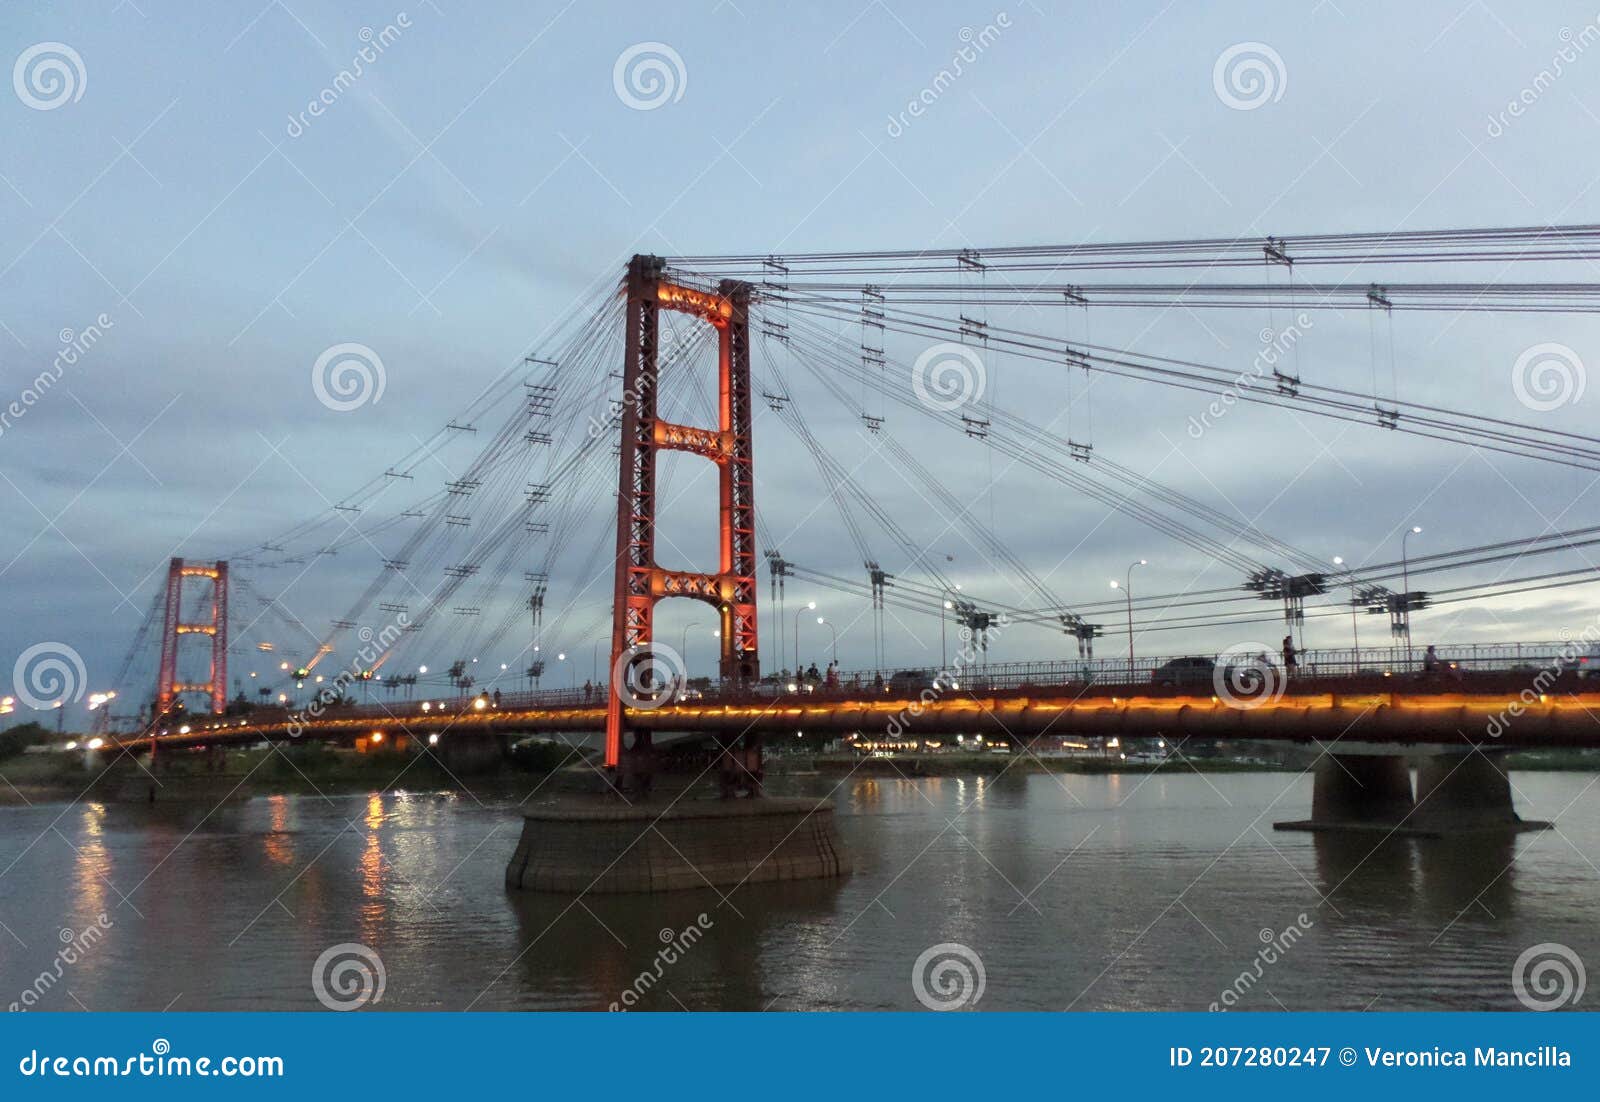 santa fe hanging bridge showing off its orange color